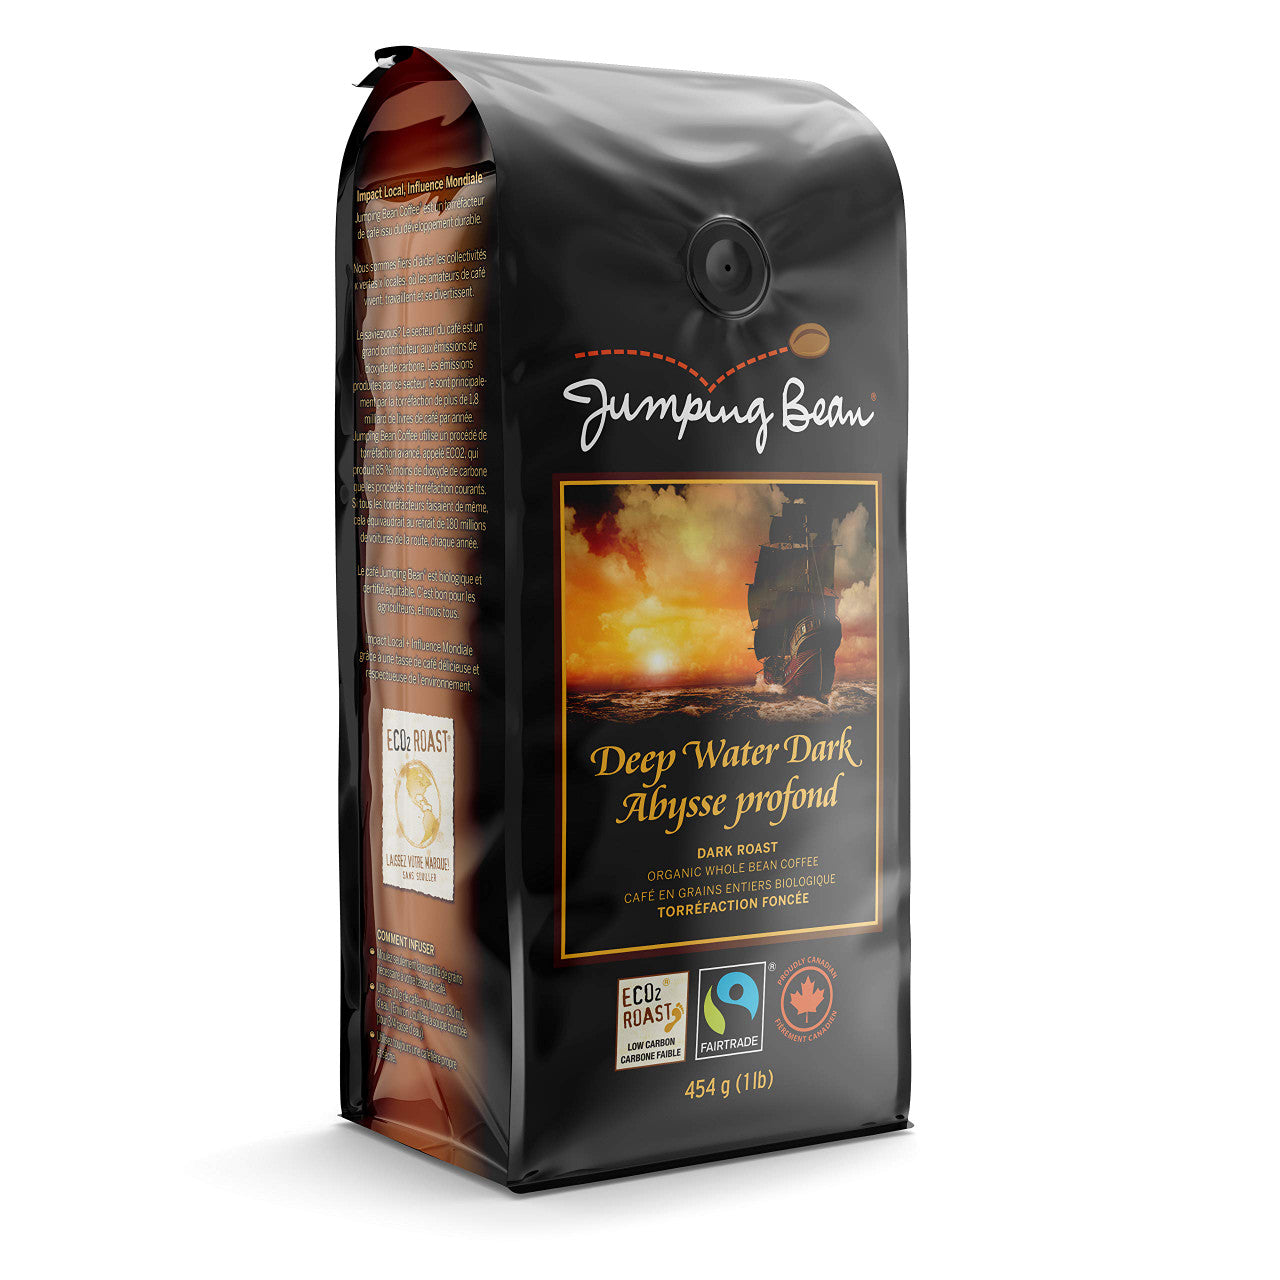 Jumping Bean Deep Water Roast Fairtrade Organic Whole Bean Coffee, Dark Roast, 454g/1lb., {Imported from Canada}